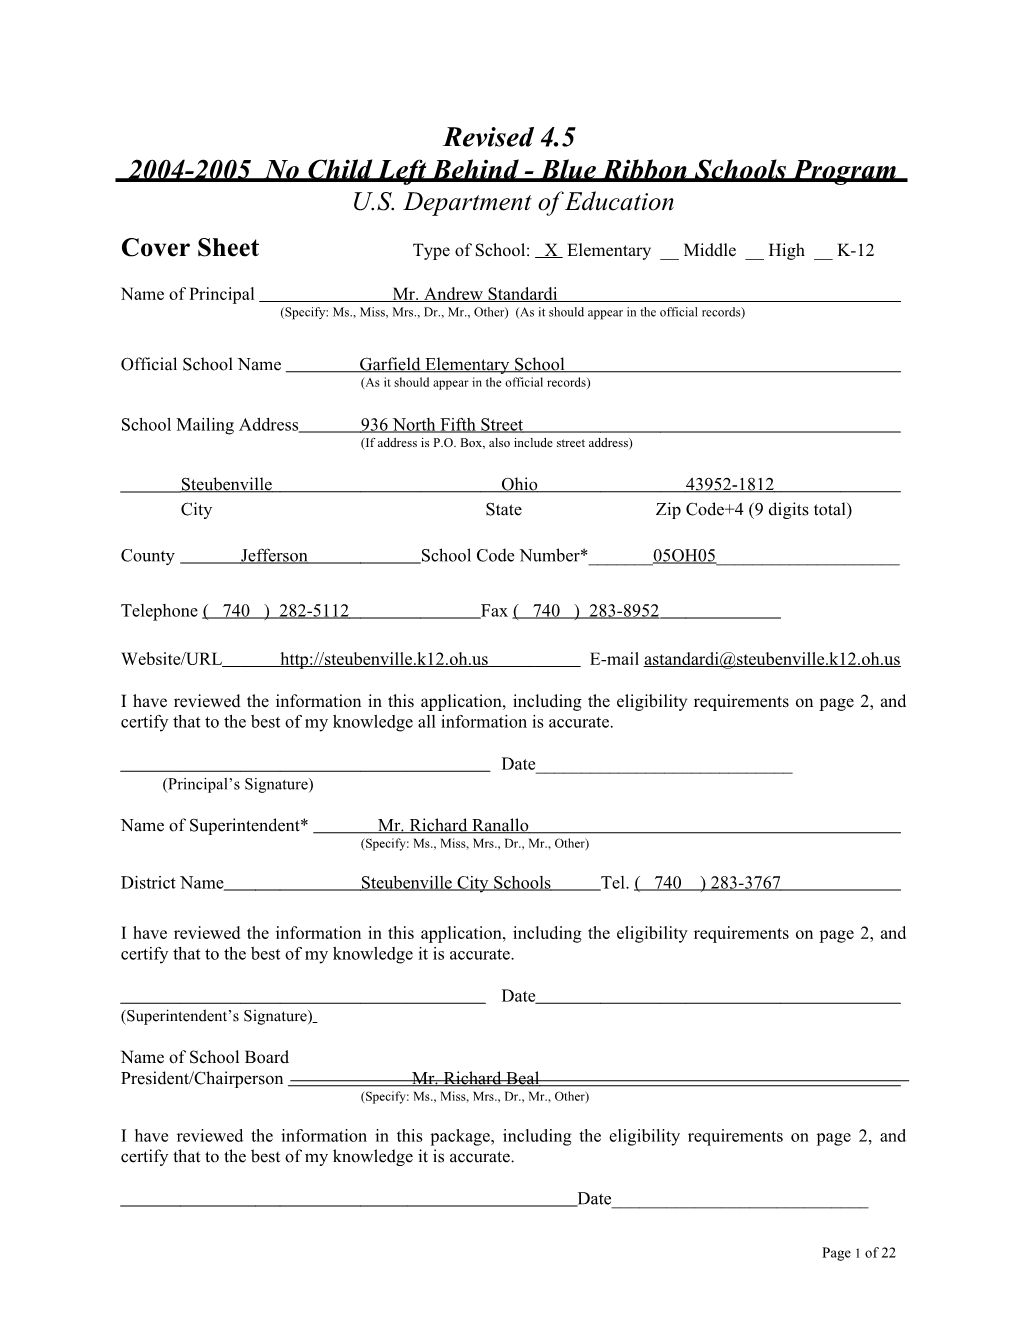 Garfield Elementary School Application: 2004-2005, No Child Left Behind - Blue Ribbon Schools